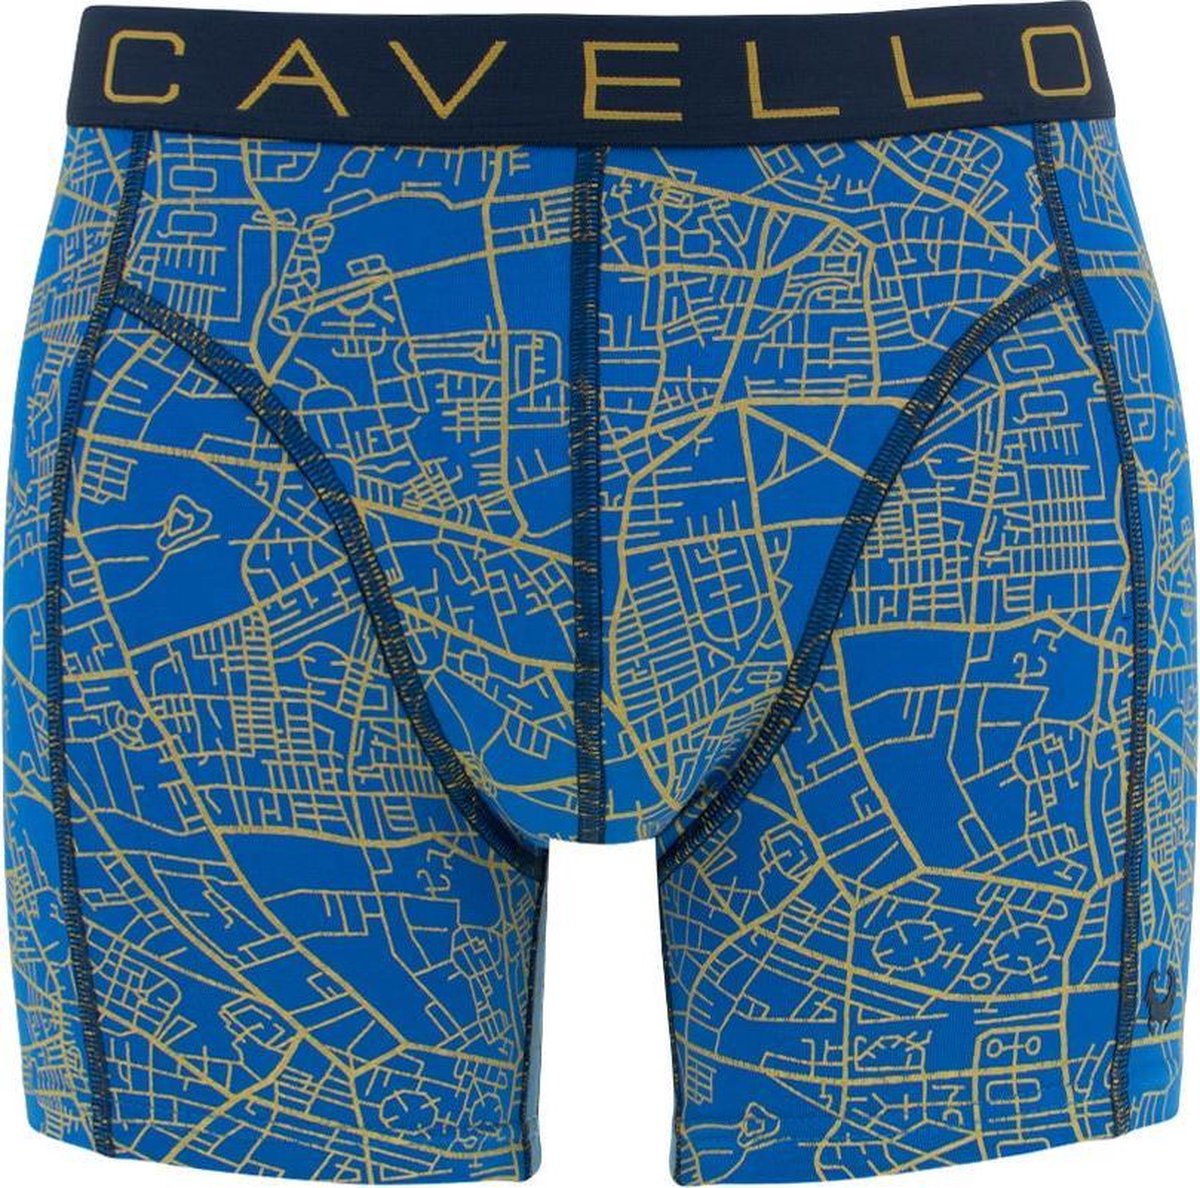 Cavello - Heren - 2-Pack Boxershorts Grafisch - Blauw - M